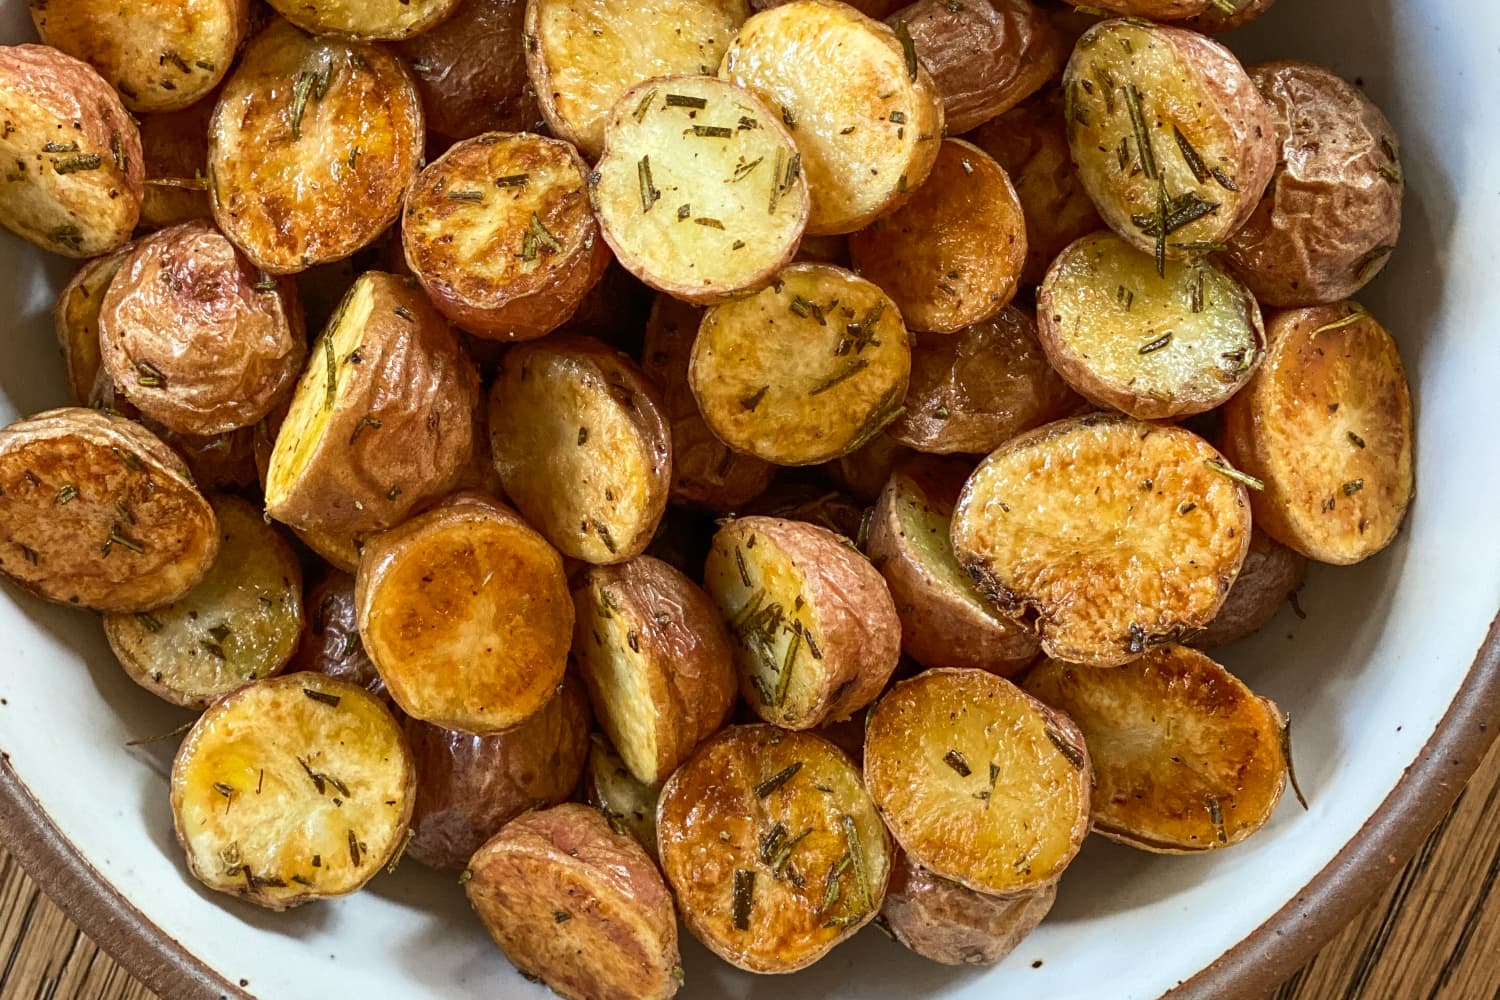 Roasted Baby Potatoes with Rosemary Recipe, Rachael Ray